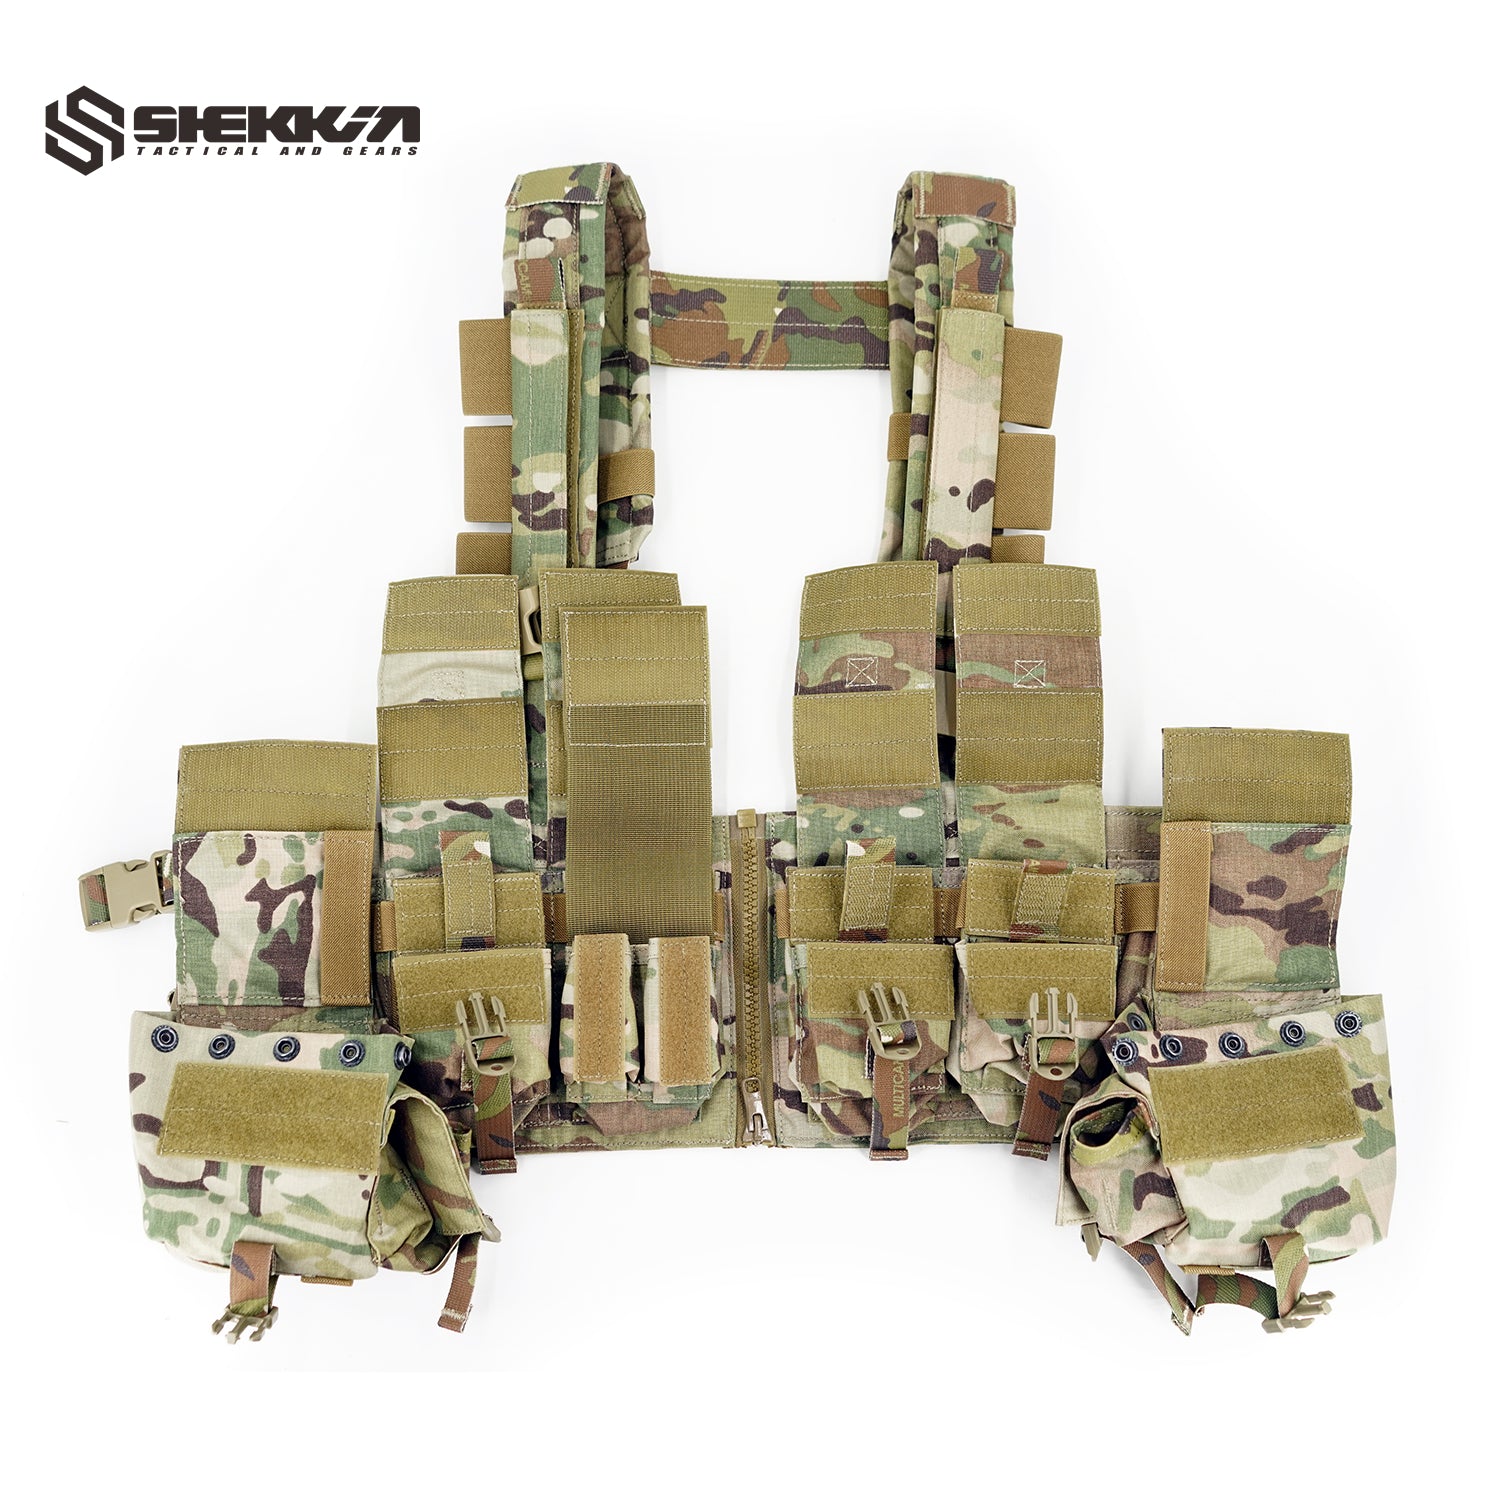 Multicam MPCR - Shekkin Gears